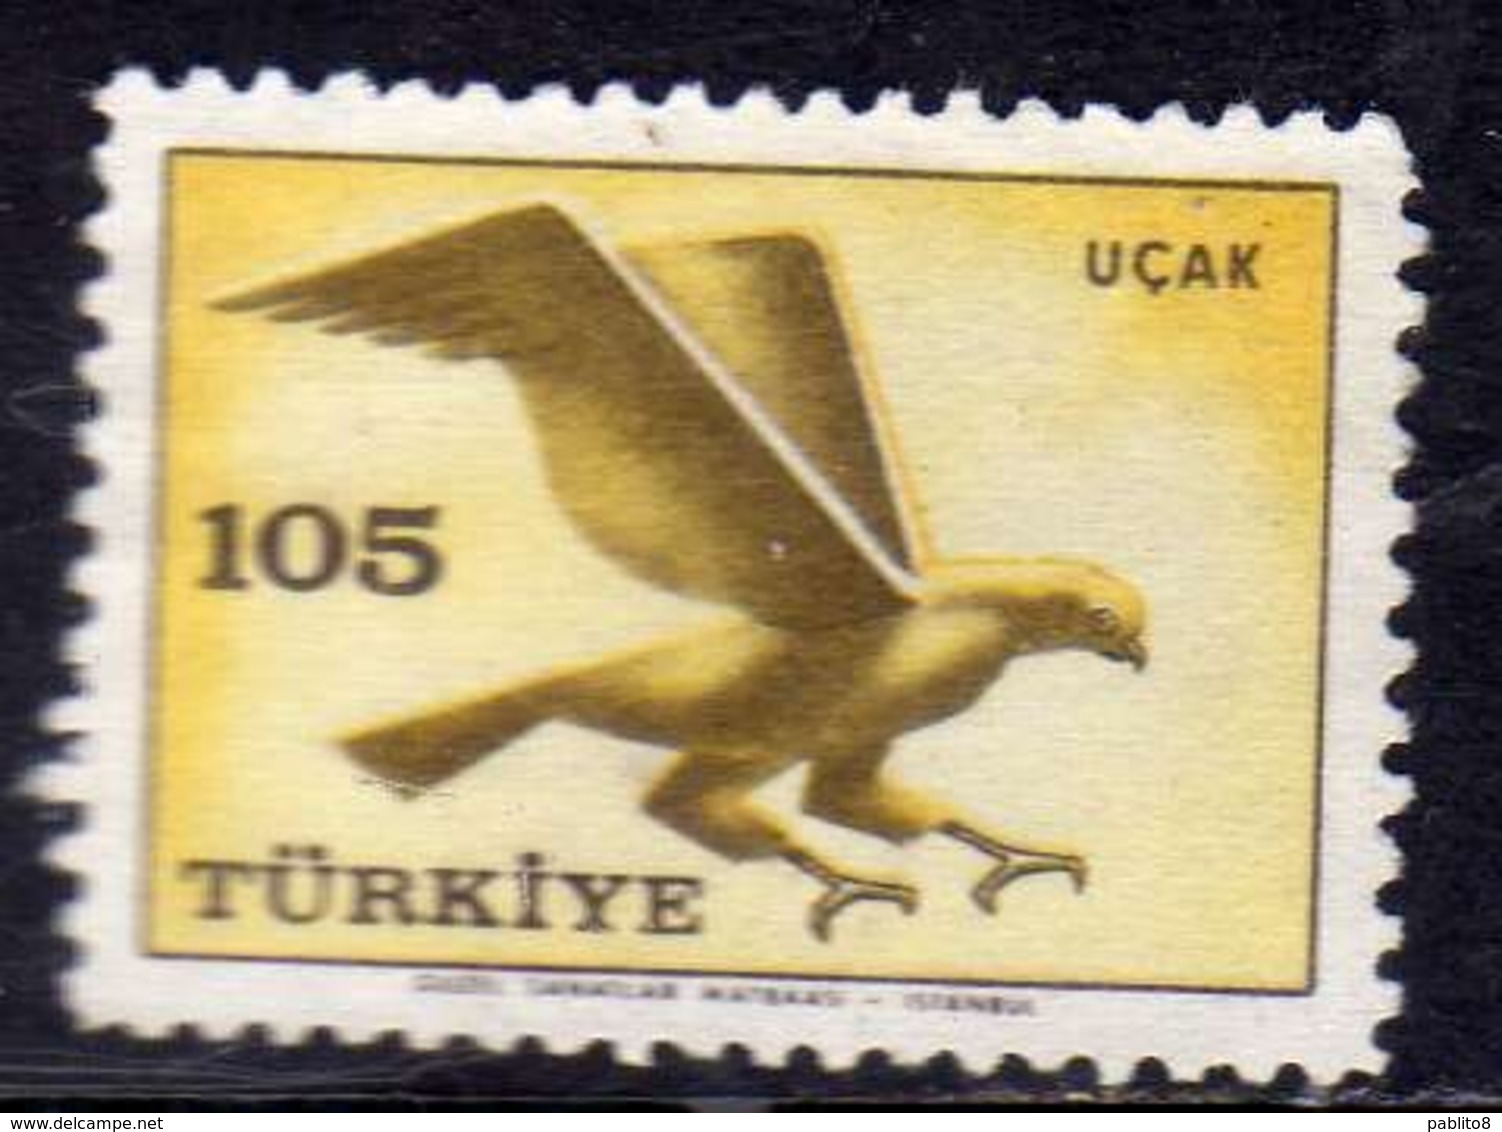 TURCHIA TURKÍA TURKEY 1959 AIR MAIL POSTA AEREA BIRD FAUNA AVICOLA HAWK FALCO 105k MNH - Airmail